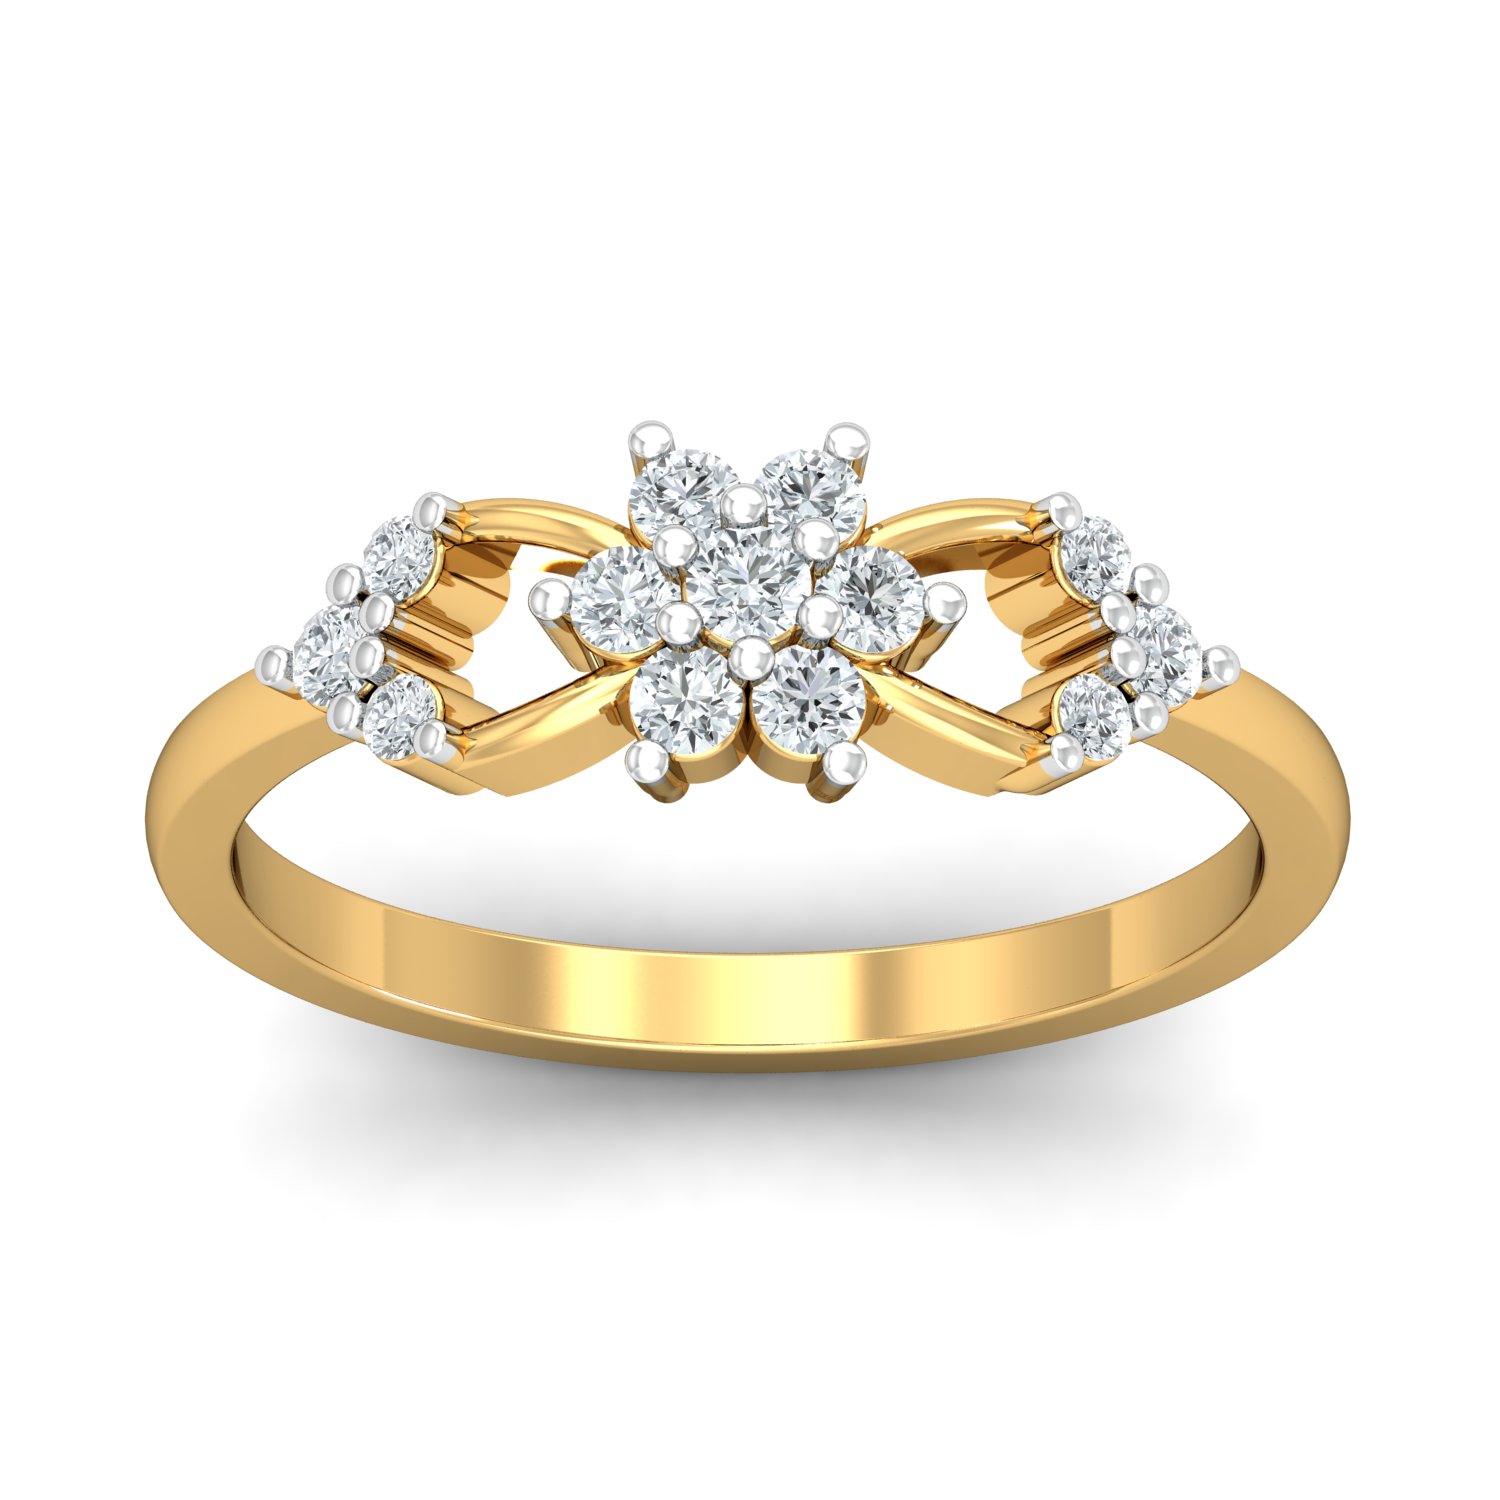 Parade Design New Classic Bridal Three Stone Diamond Engagement Ring R4687  105-603 - Hurdle's Jewelry